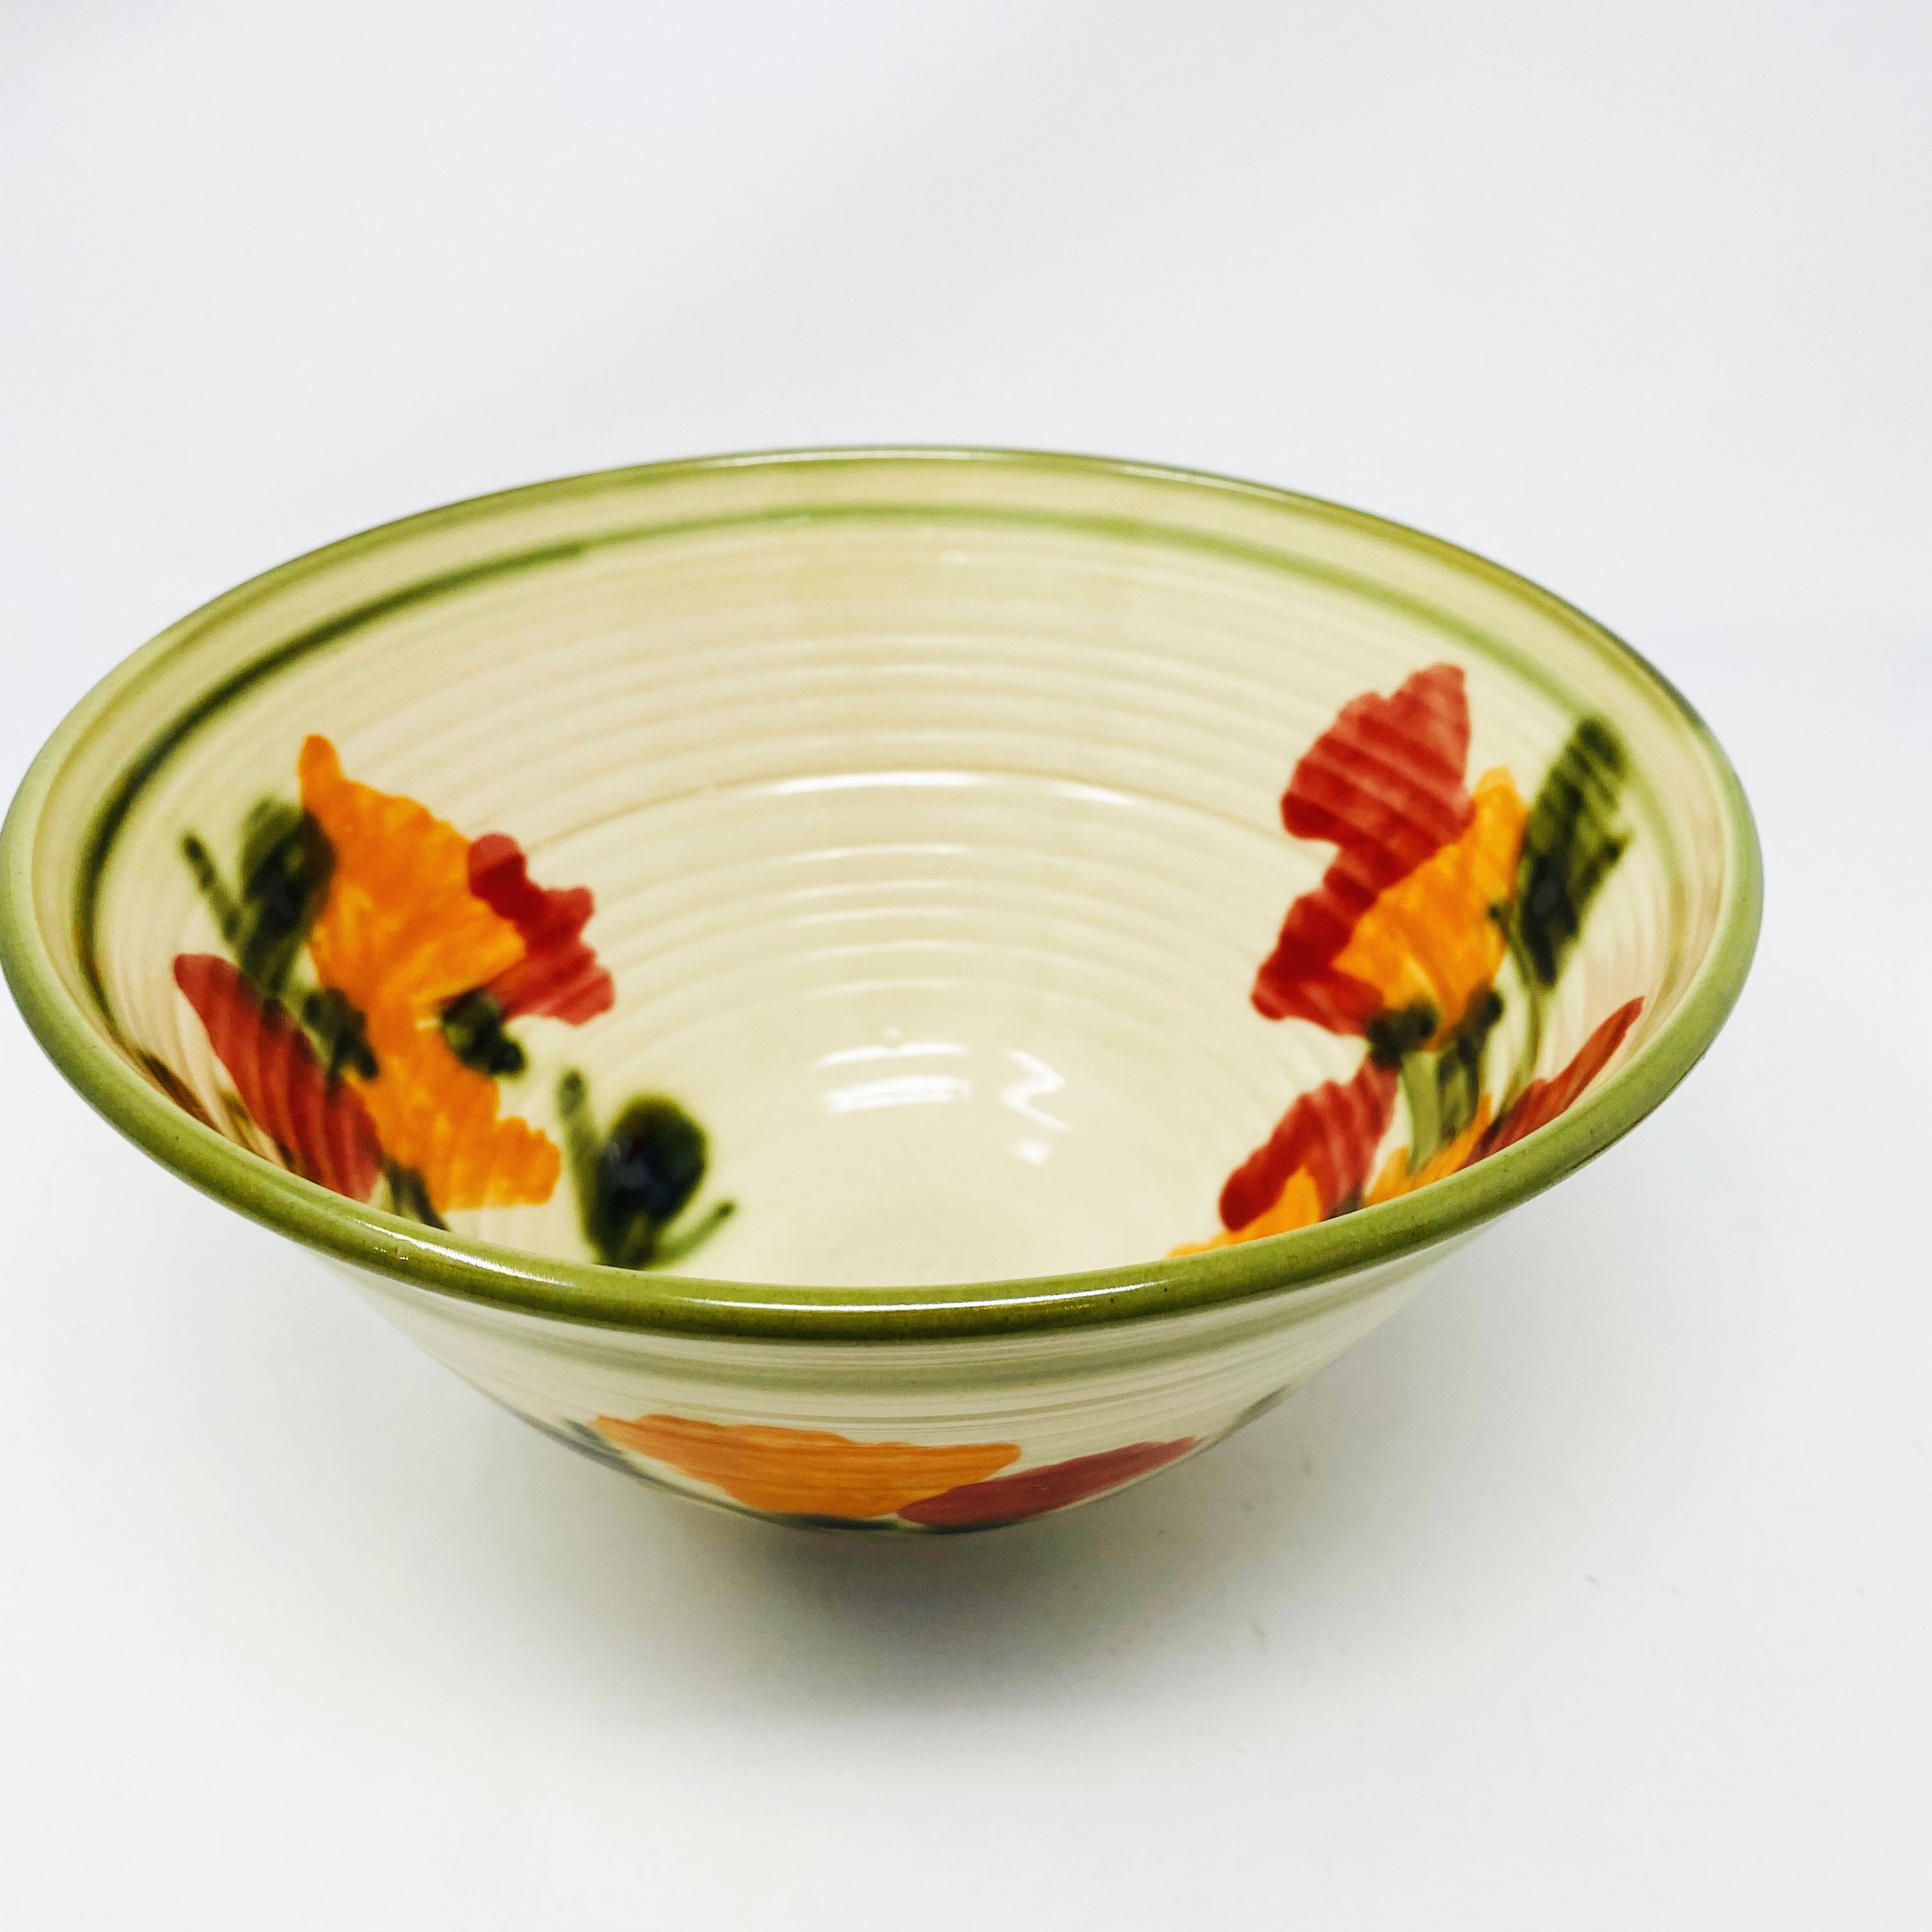 handmade ceramic salad bowl with poppies